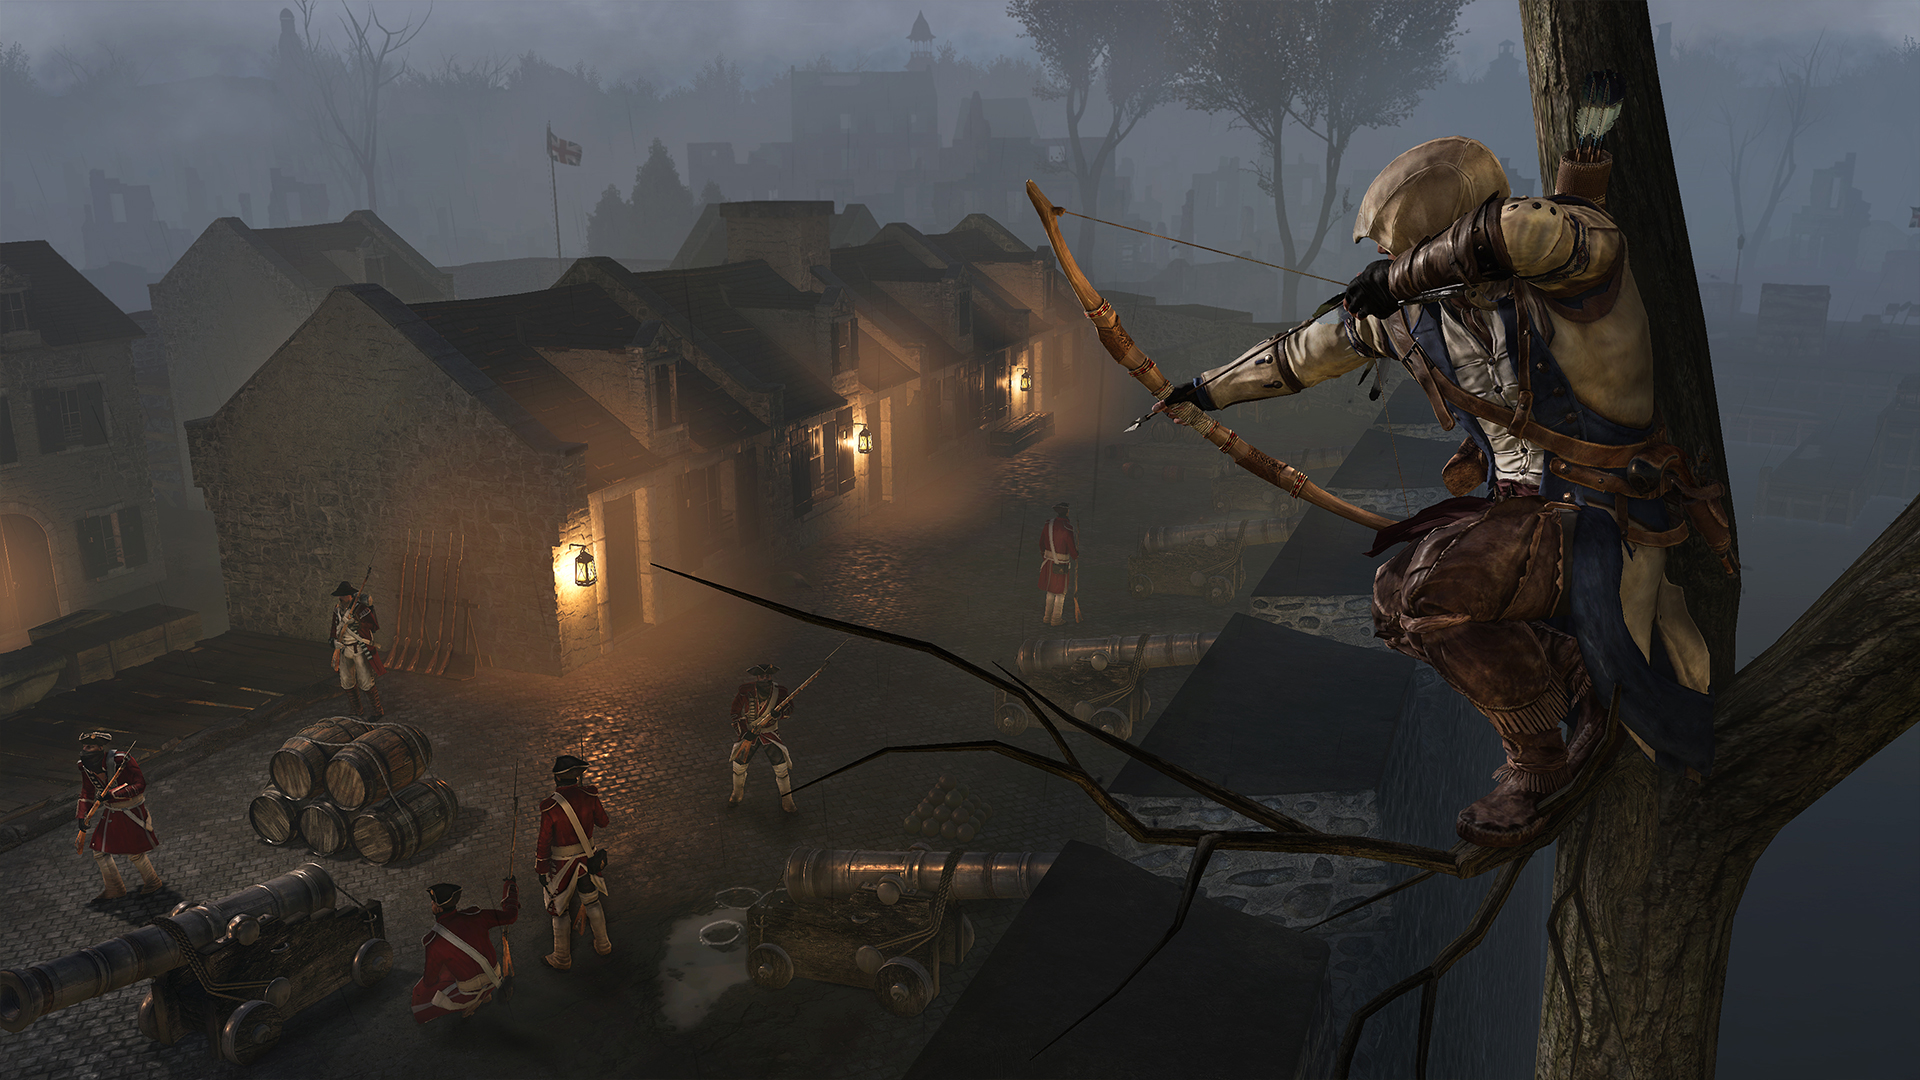 Honesty repertoire Discriminatory Assassin's Creed® III Remastered on Steam